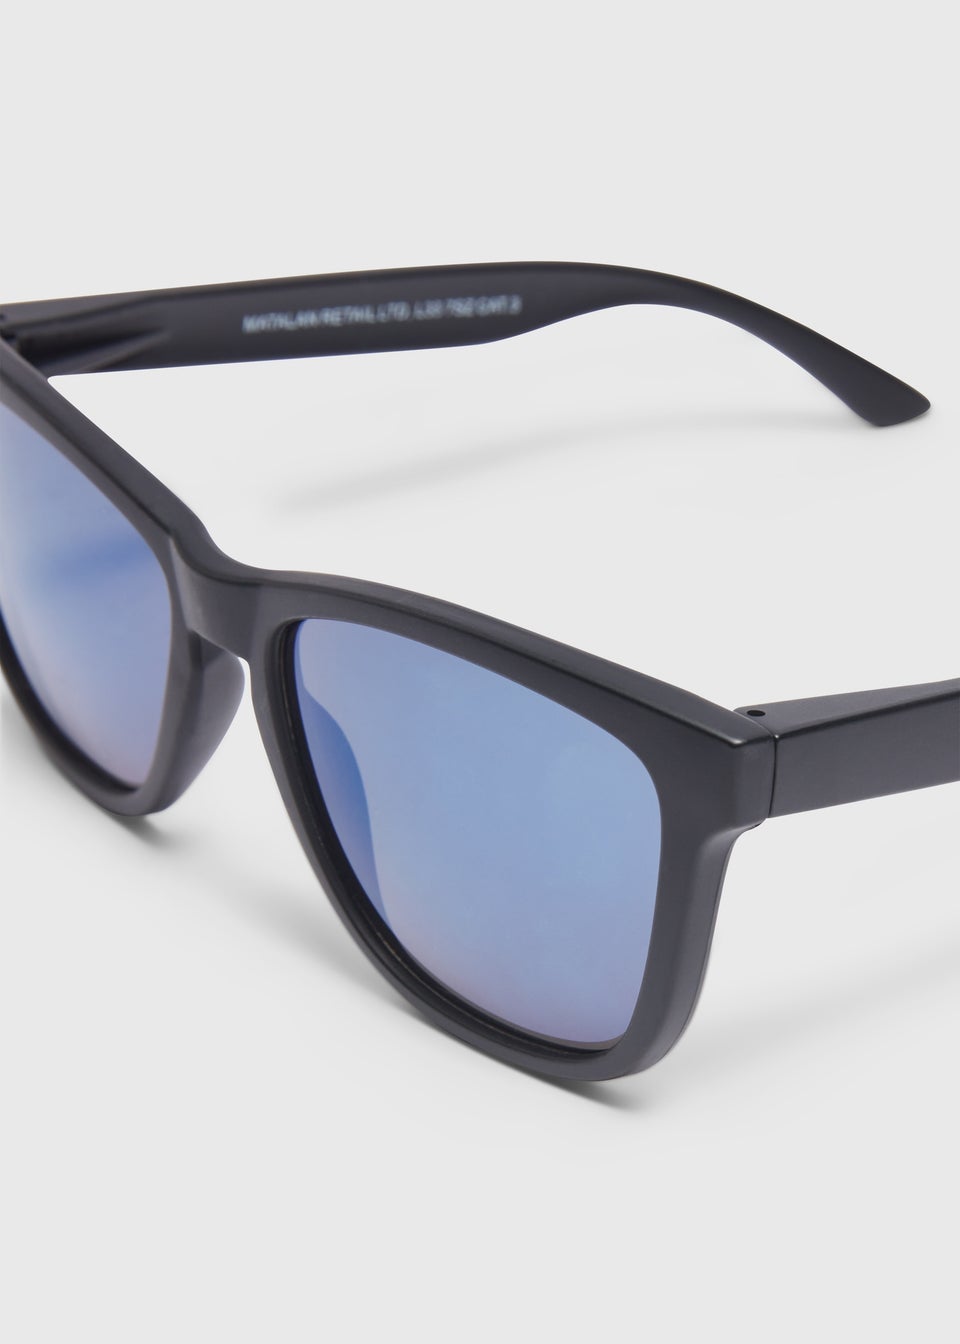 Blue Lens Wayfarer Black Frame Sunglasses